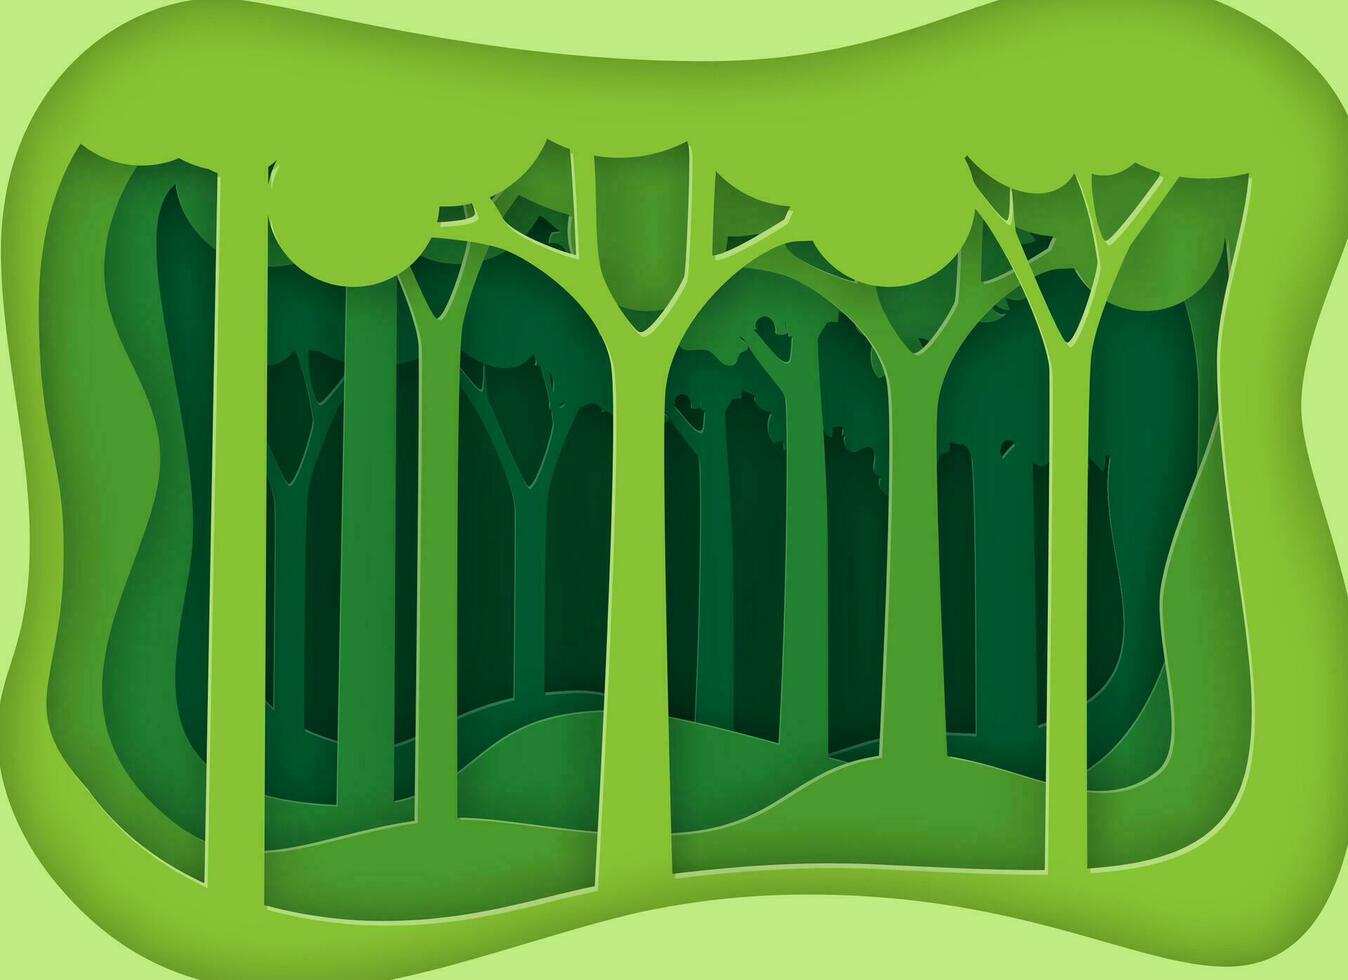 verde naturaleza bosque antecedentes modelo. verde naturaleza paisaje y bosque con origami papel capa cortar resumen antecedentes.ecologia y ambiente conservación concepto vector